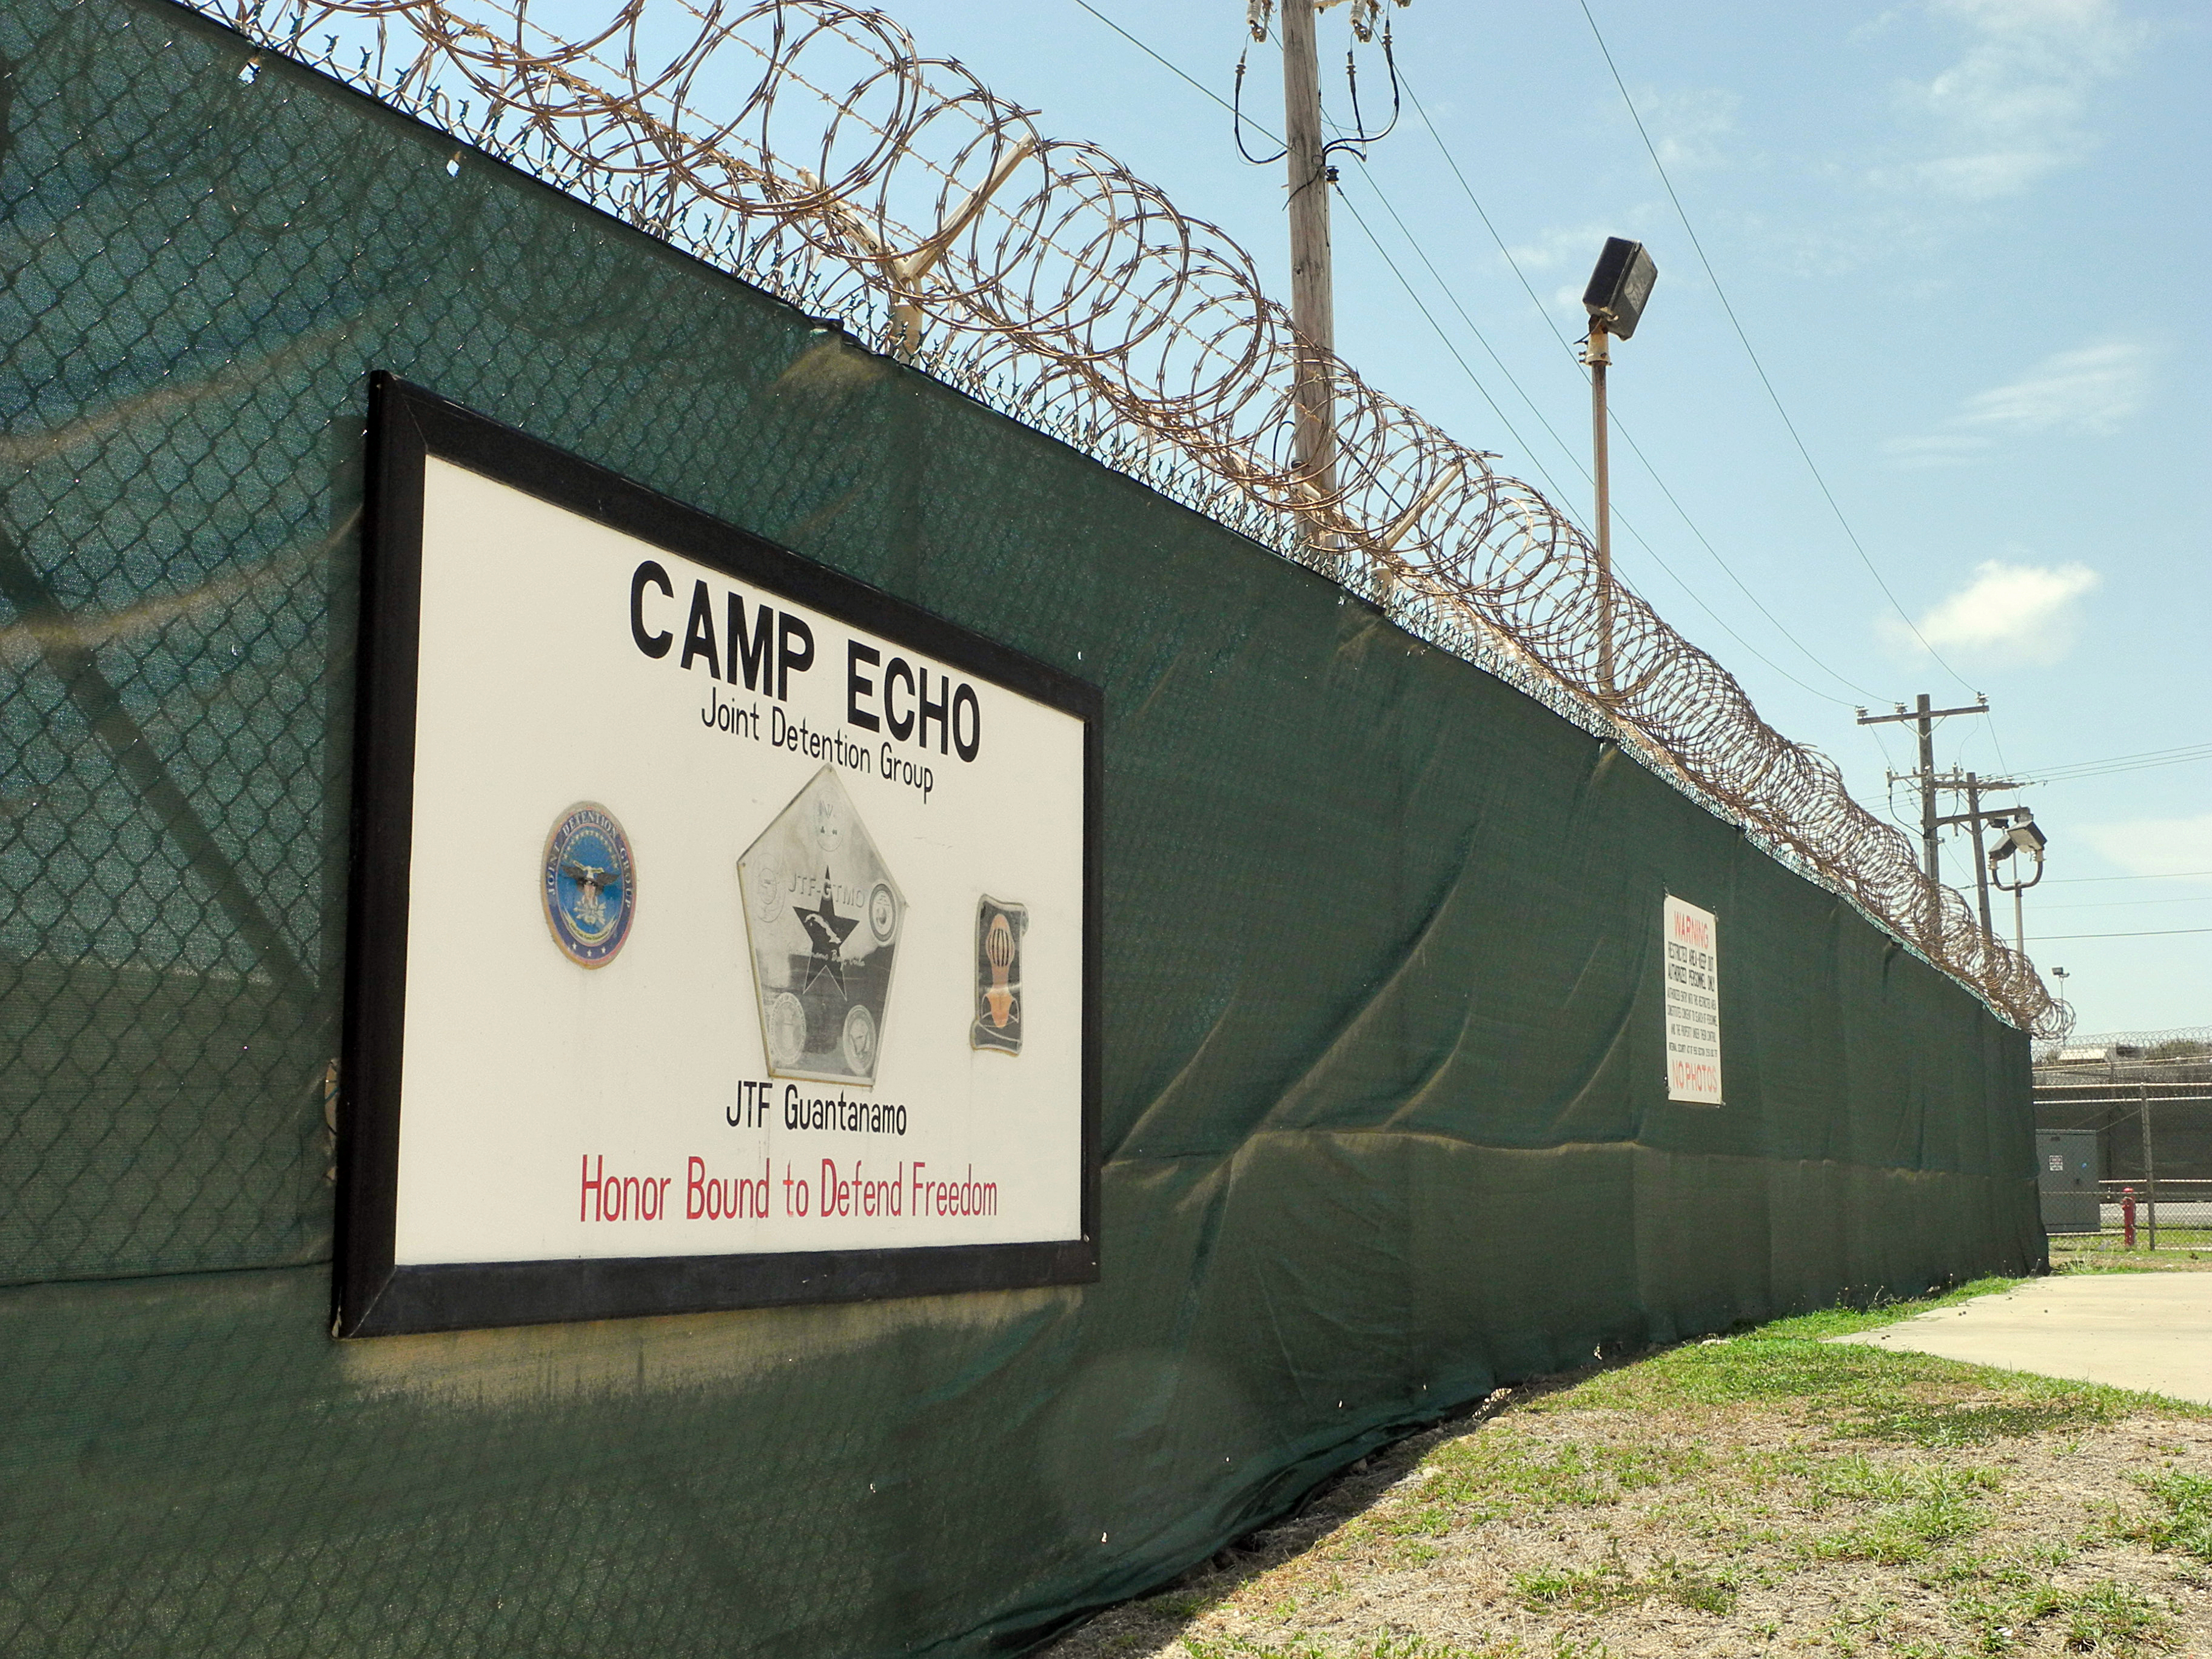 Guantanamo Bay's Camp Echo